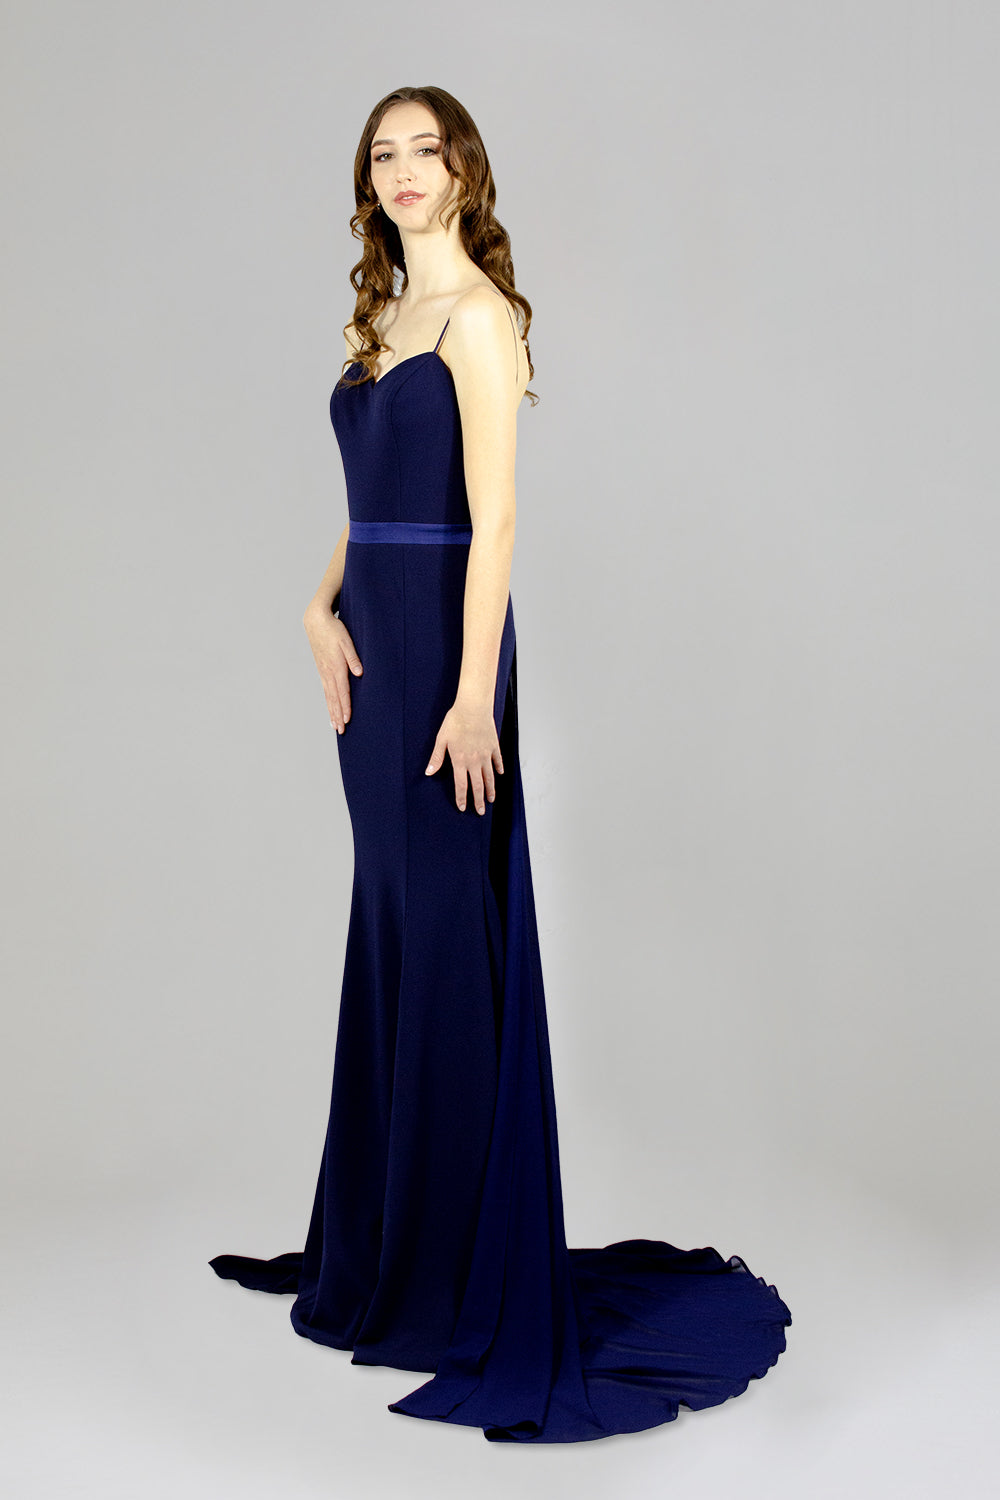 custom made navy blue formal dresses perth australia envious bridal & formal